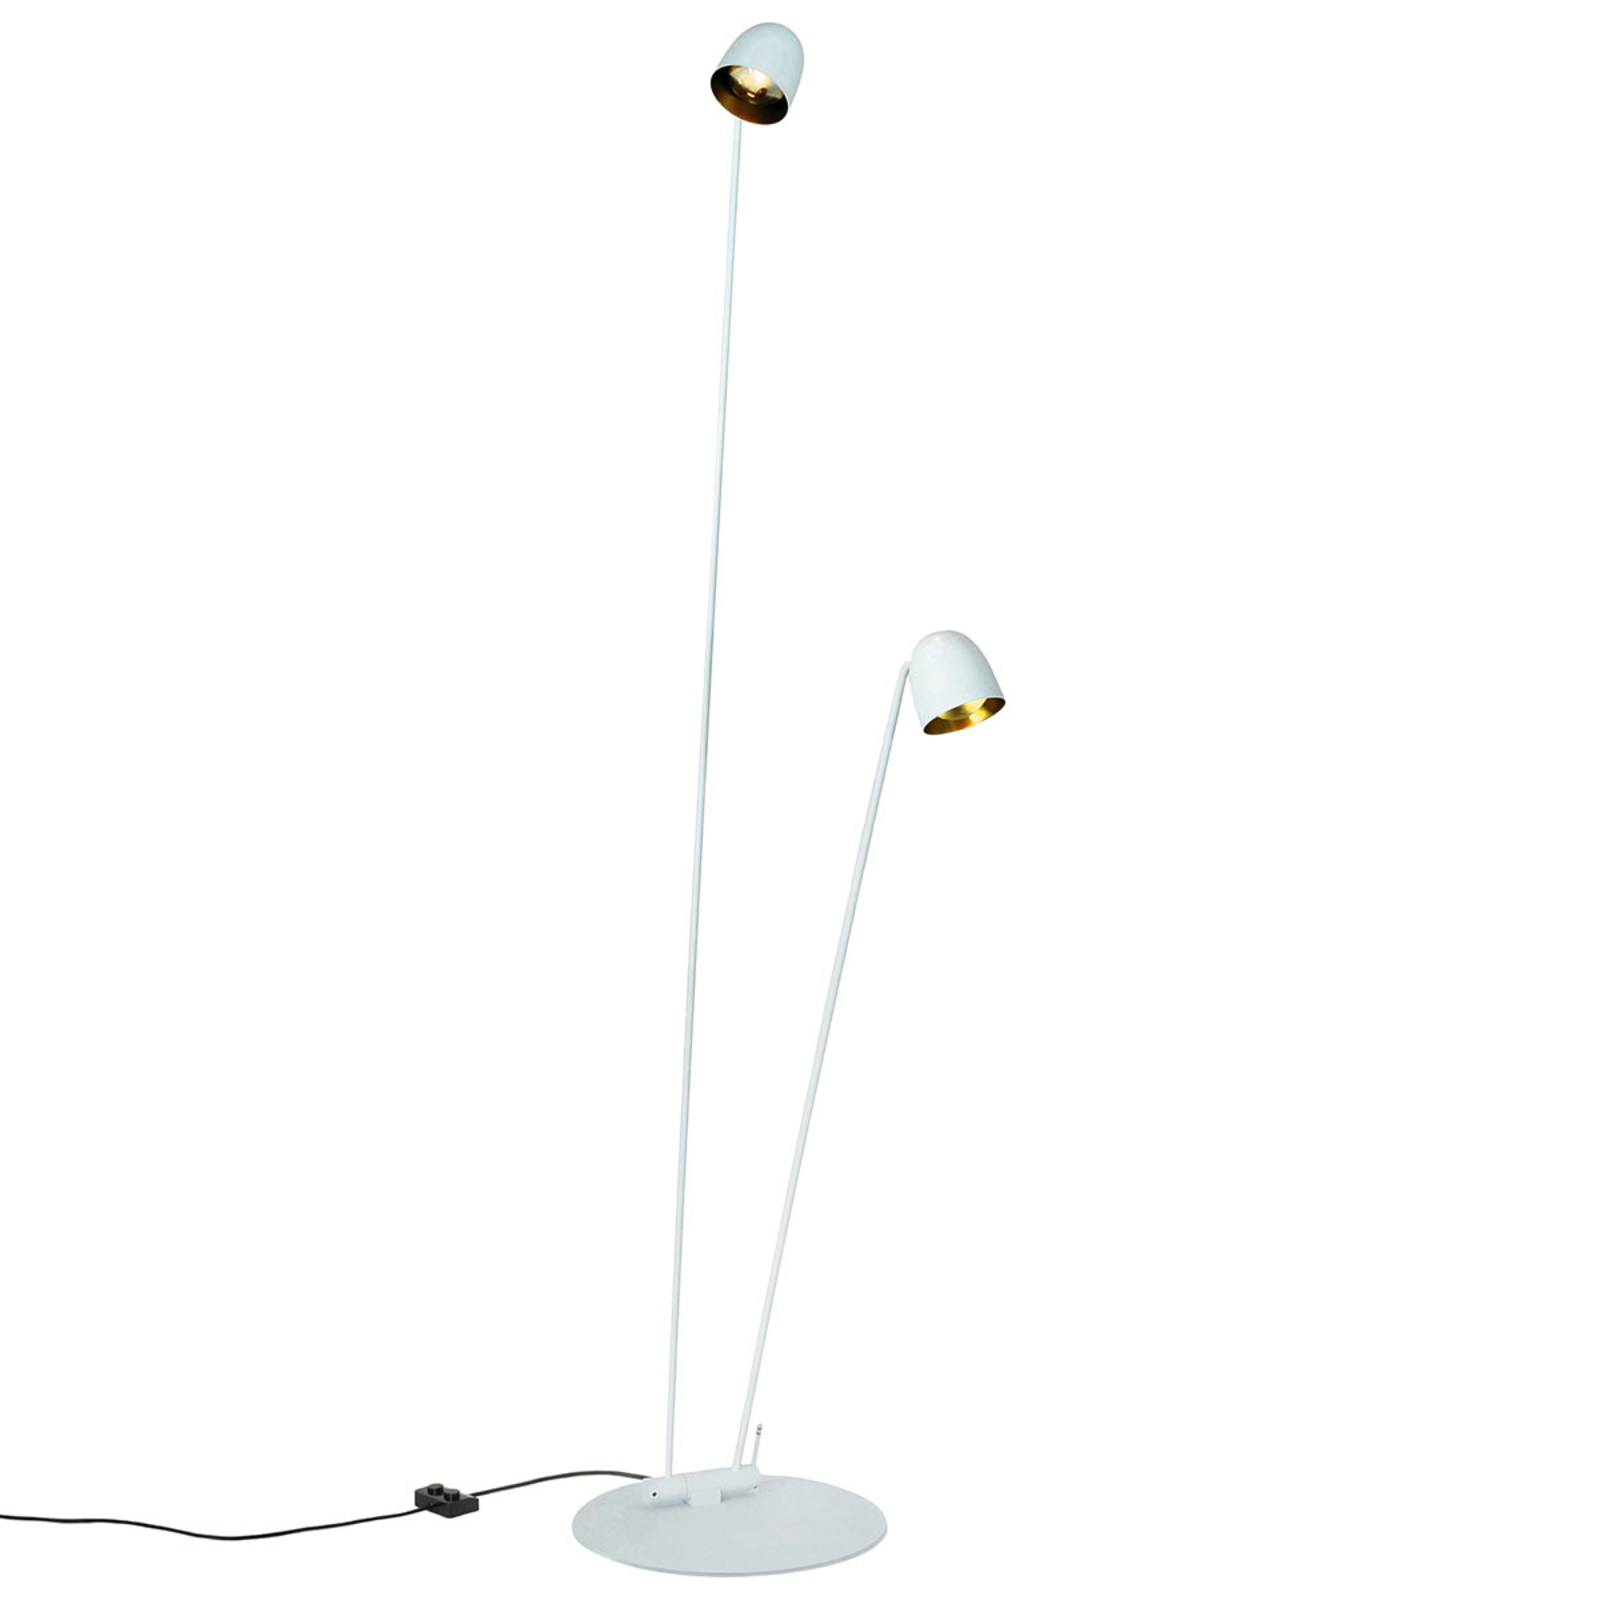 Flexibel instelbare LED vloerlamp Speers F wit